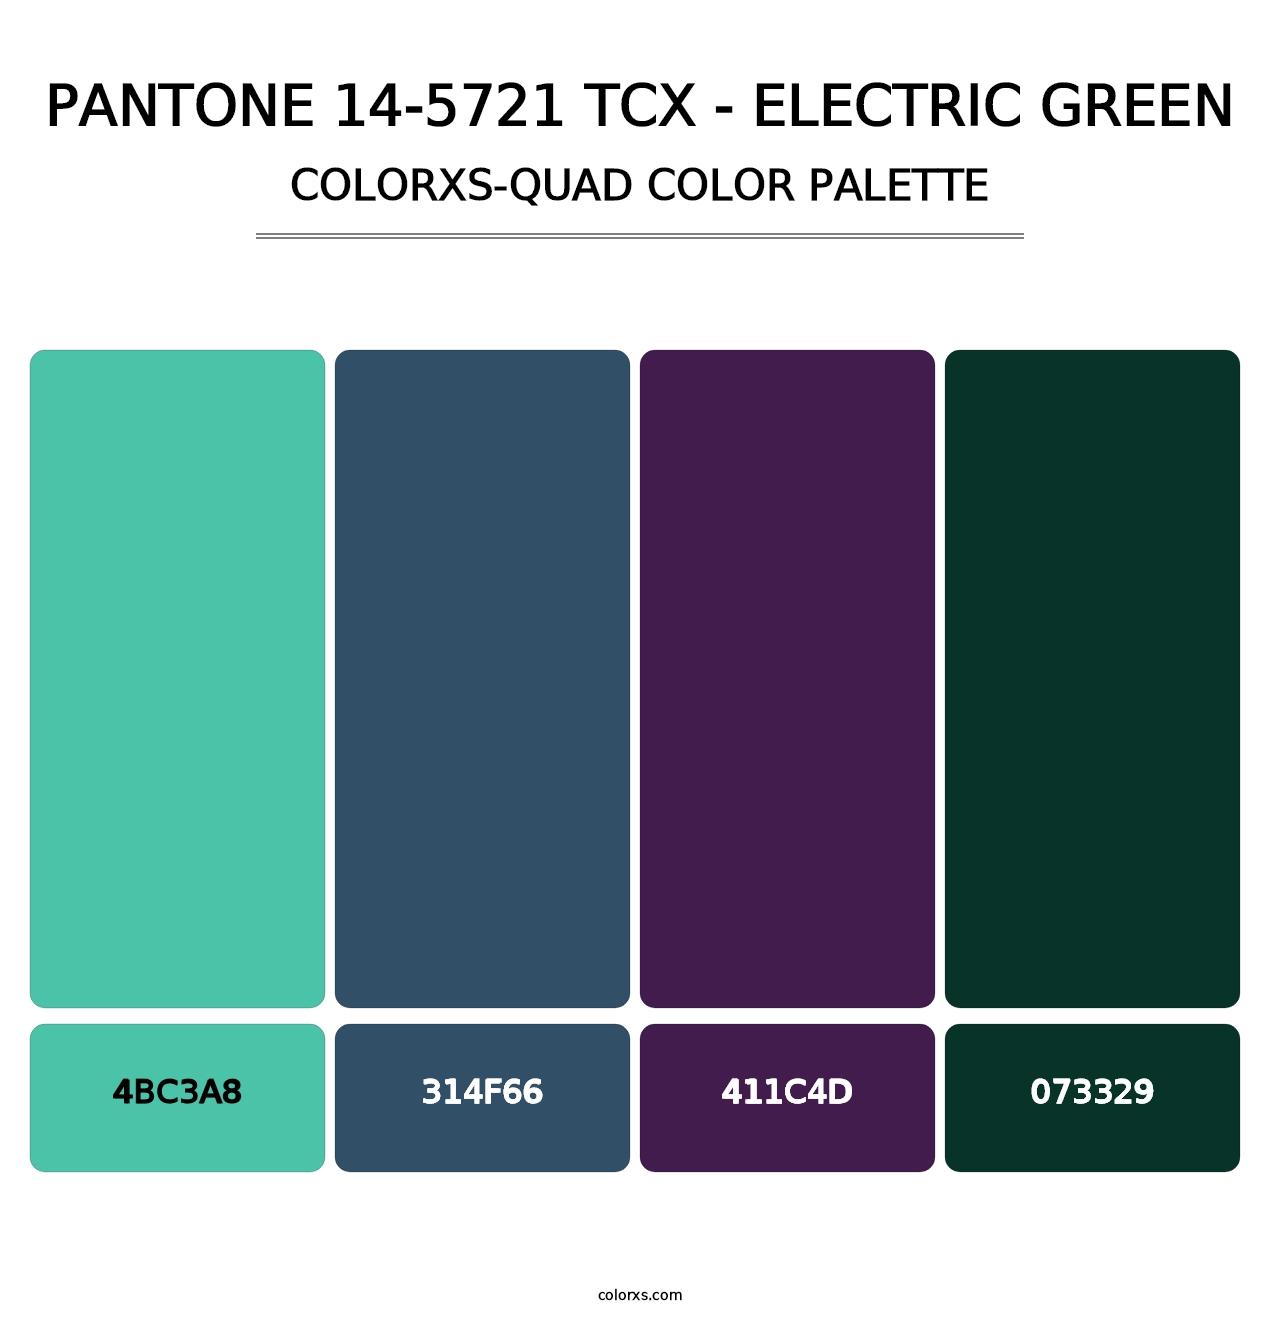 PANTONE 14-5721 TCX - Electric Green - Colorxs Quad Palette